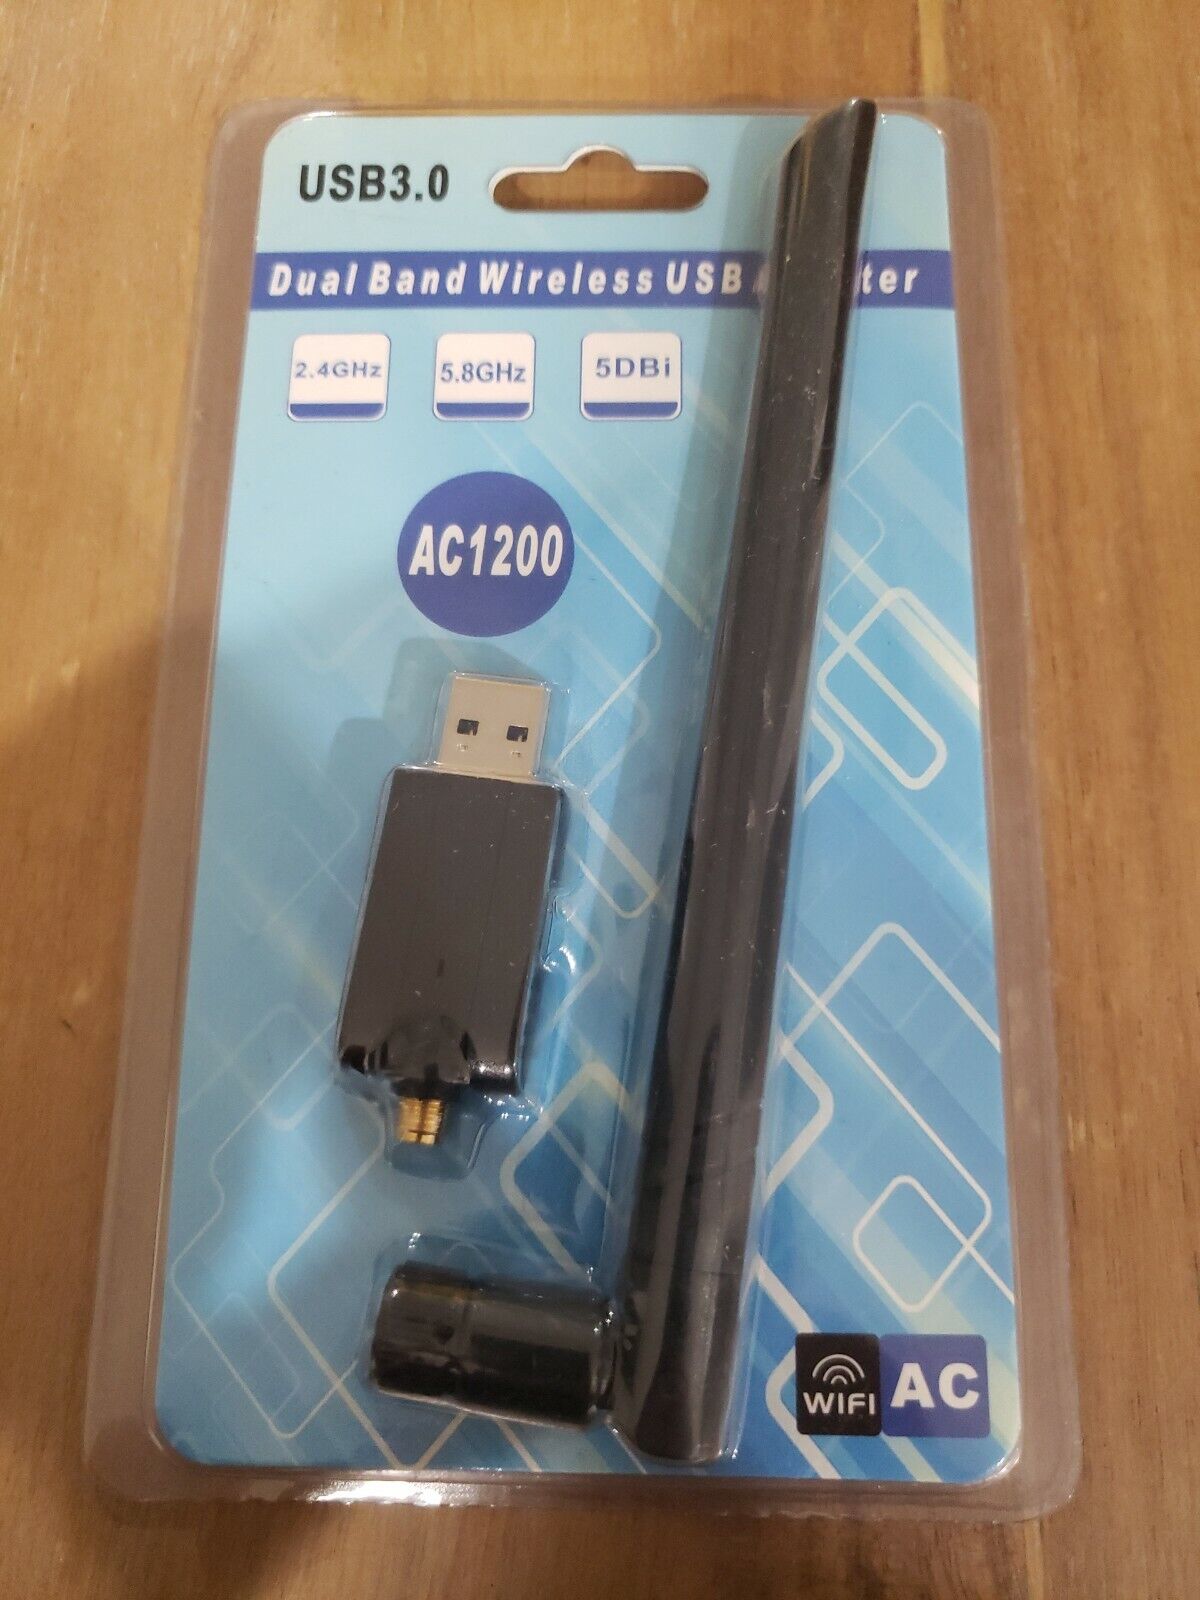 USB 3.0 Dual Band USB Adapter, 2.4 GHz, 5.8 GHz, 5 DBI, AC1200